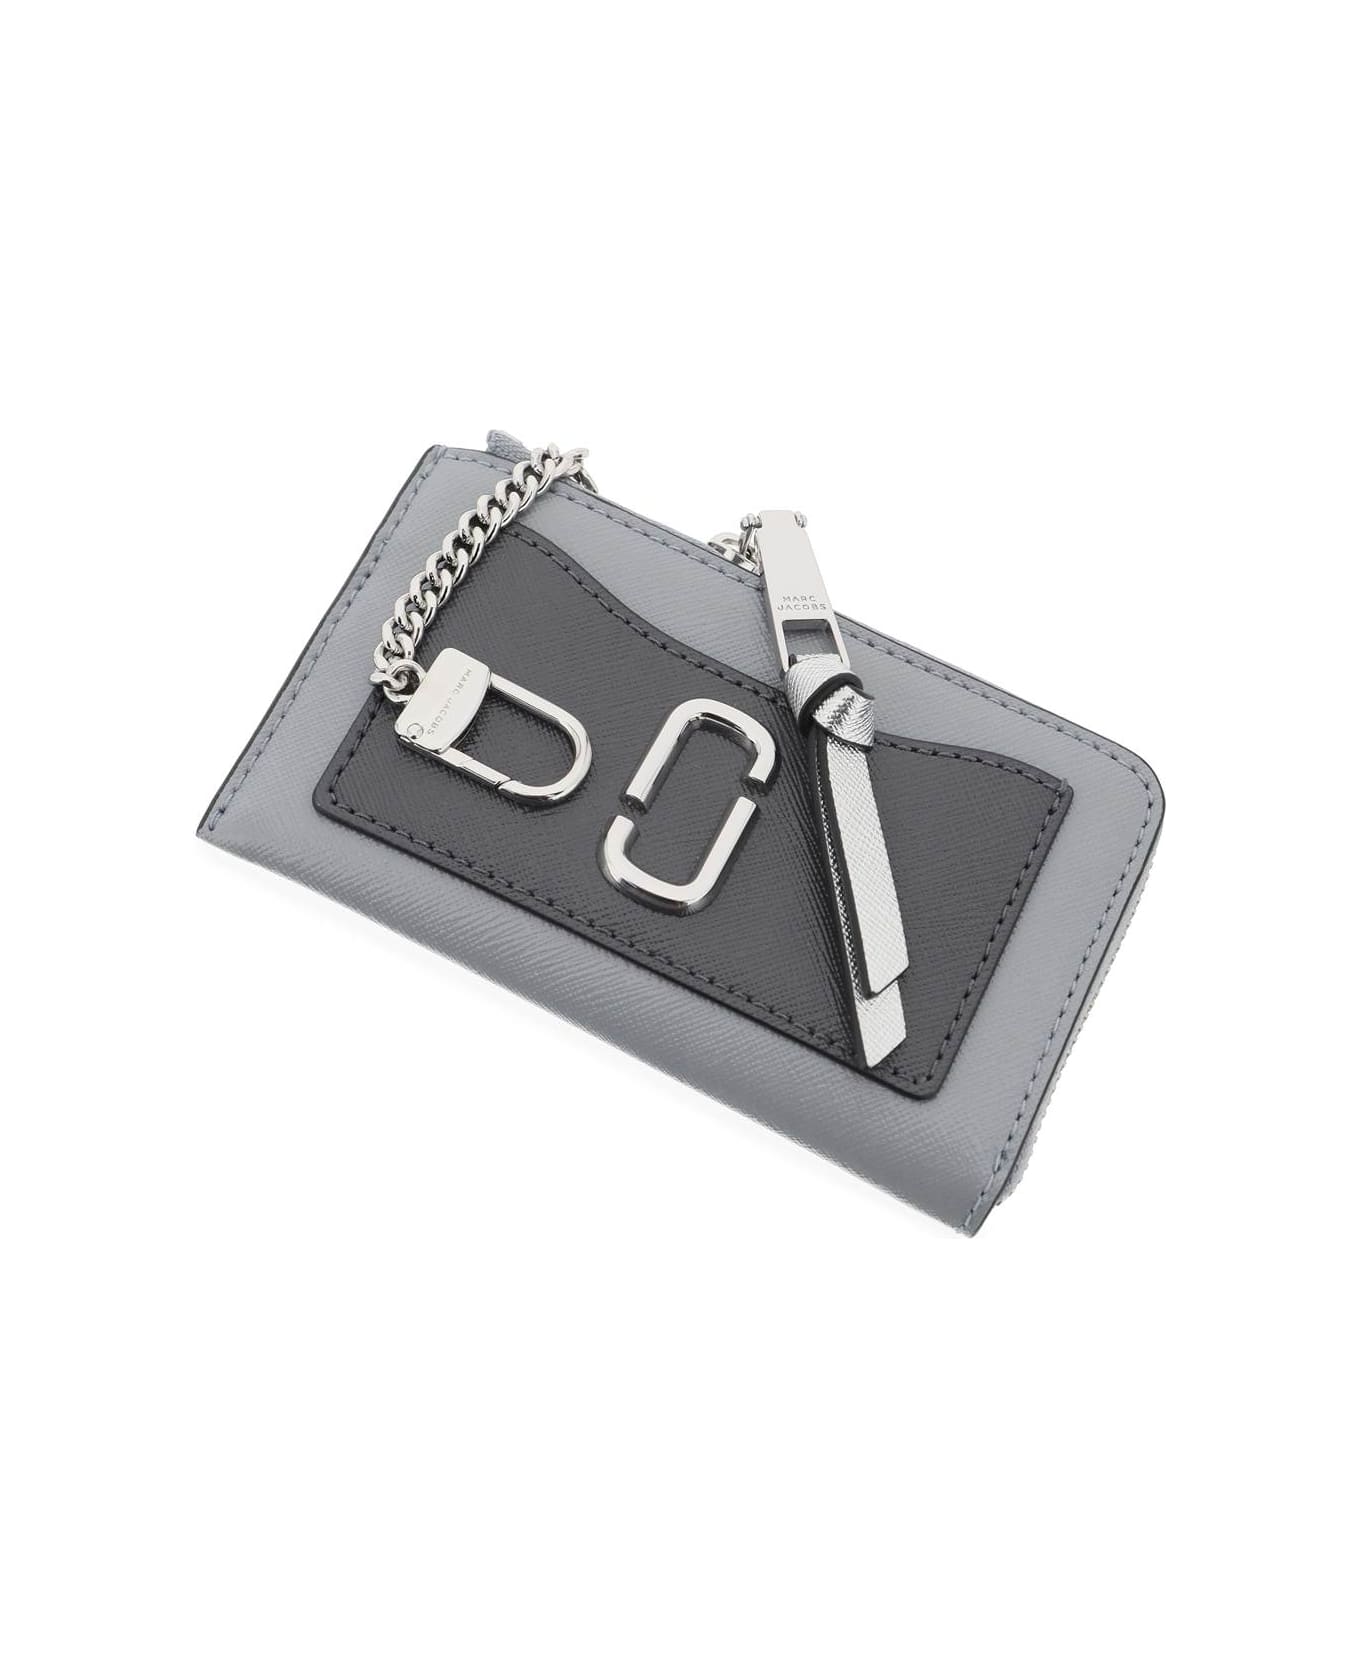 Marc Jacobs The Utility Snapshot Top Zip Multi Wallet - WOLF GREY MULTI (Grey)